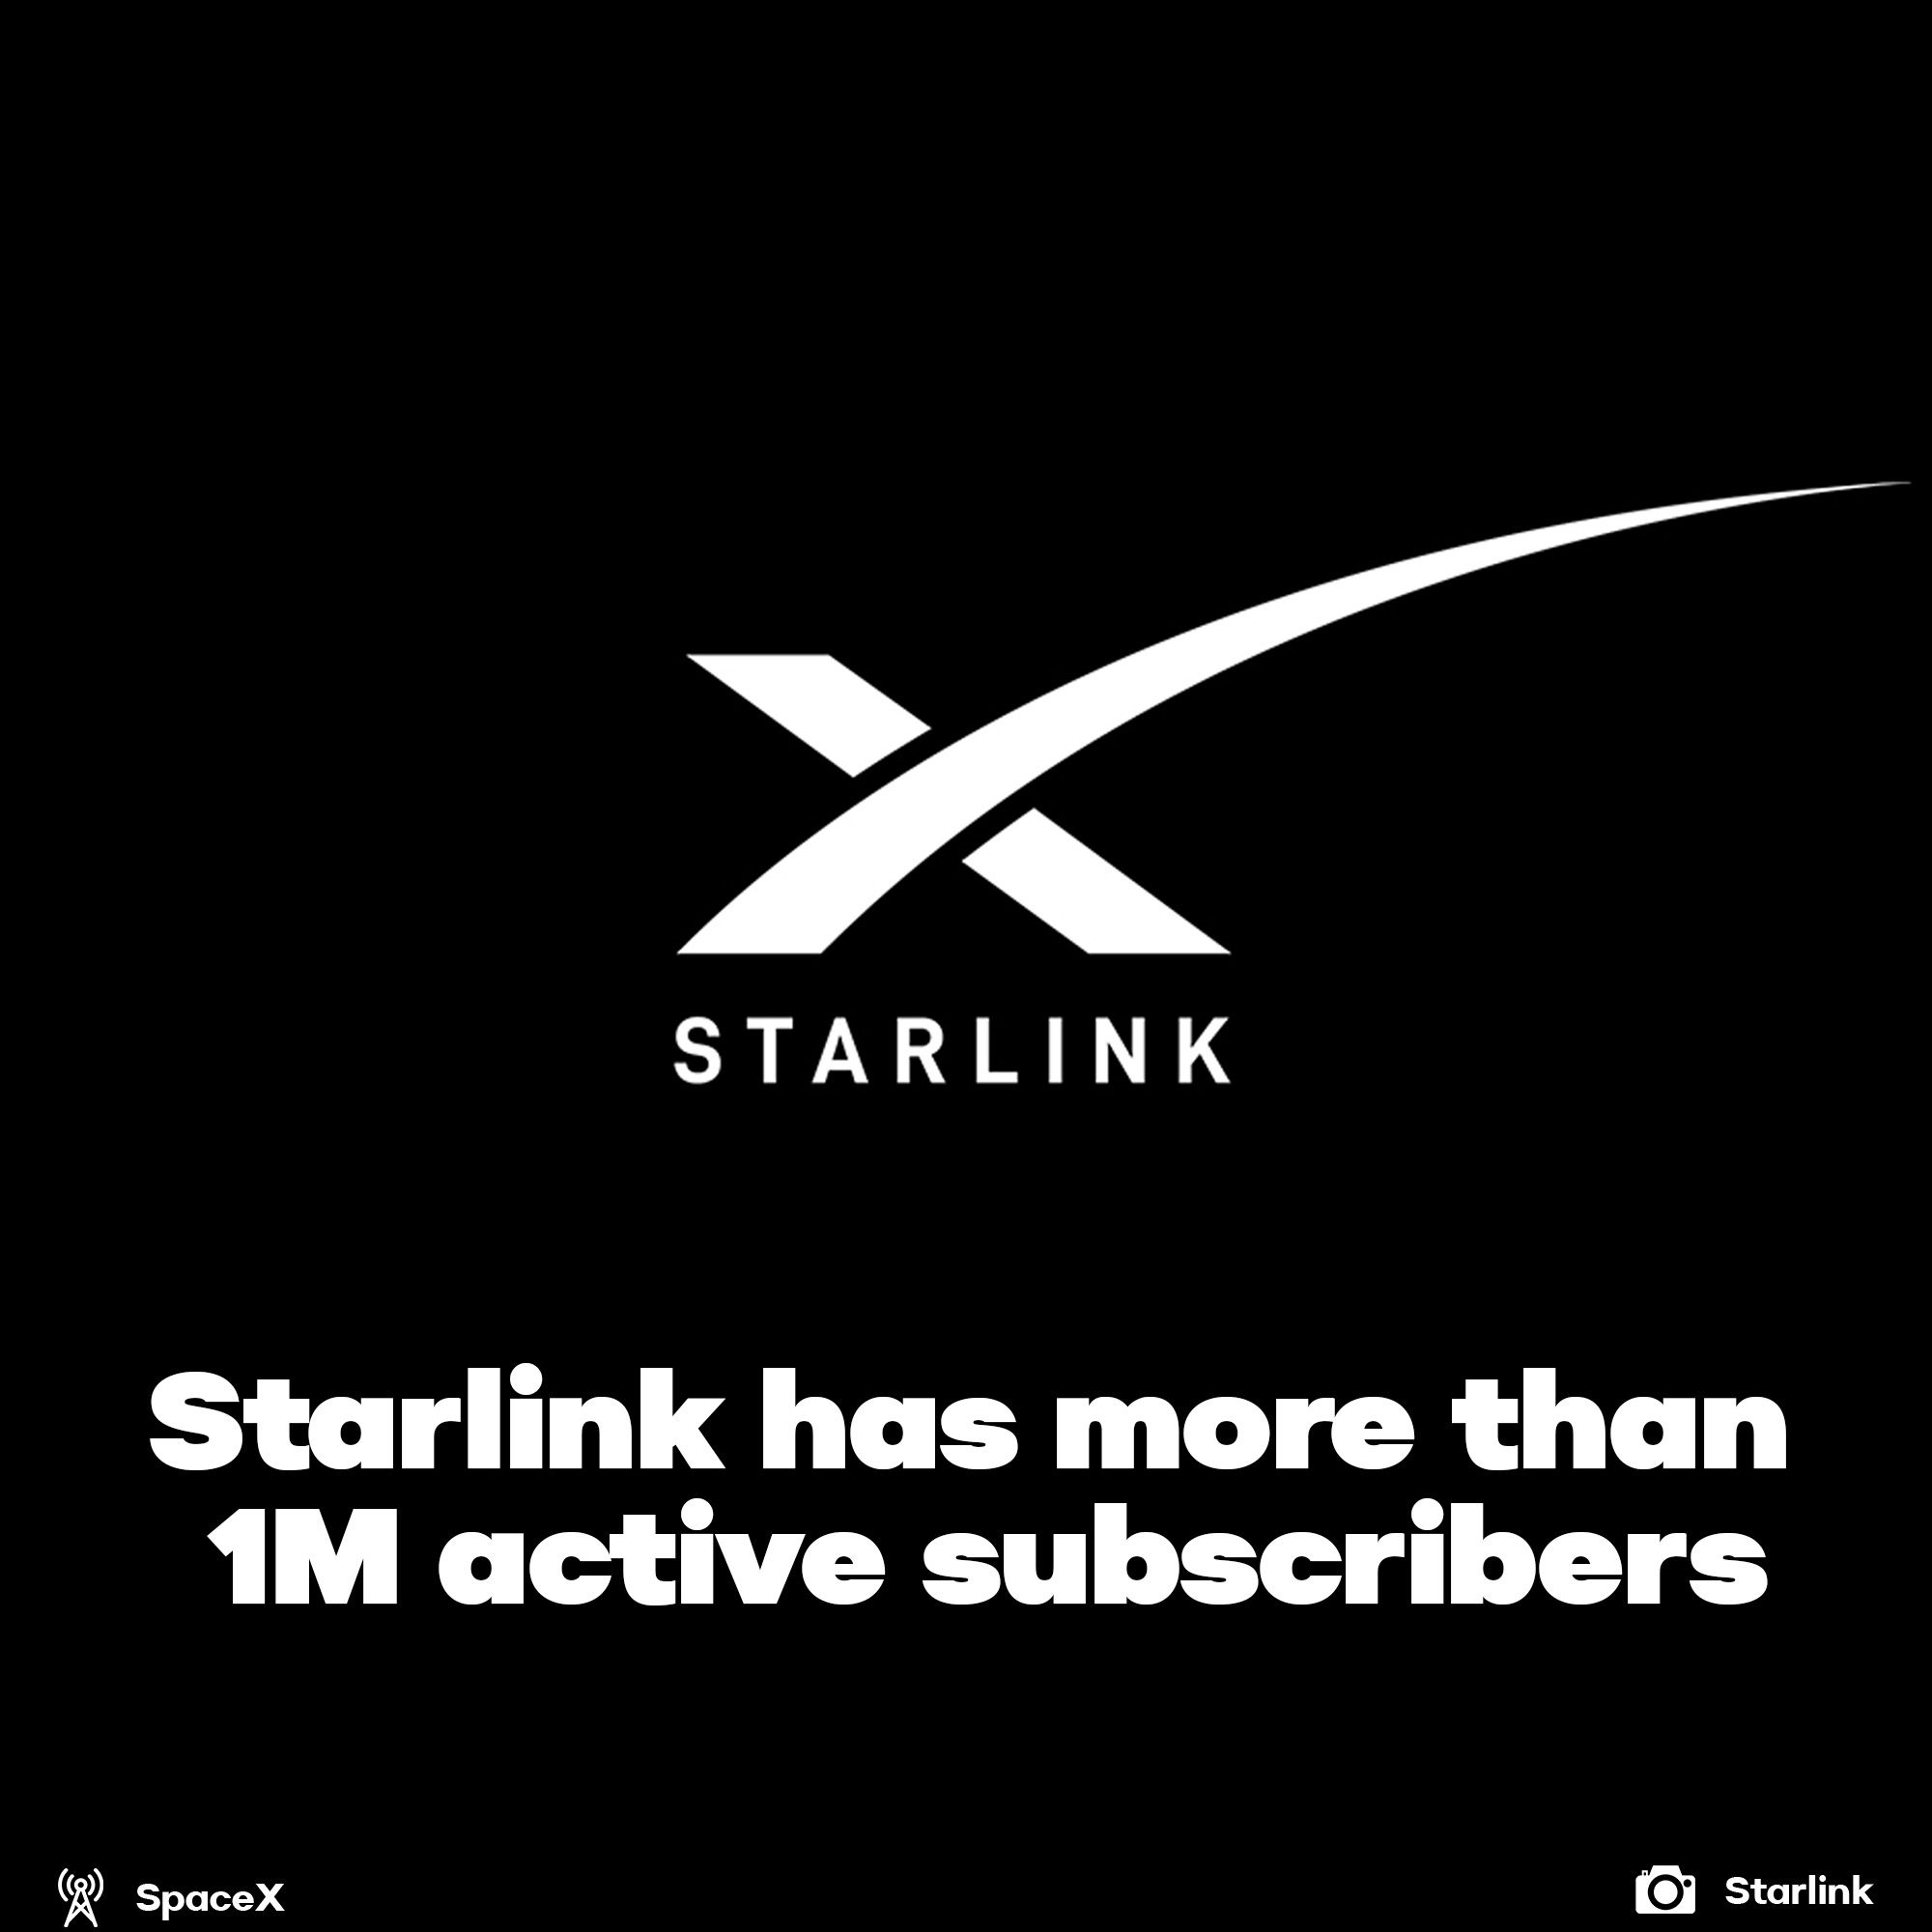 Starlink has 1M subscribers